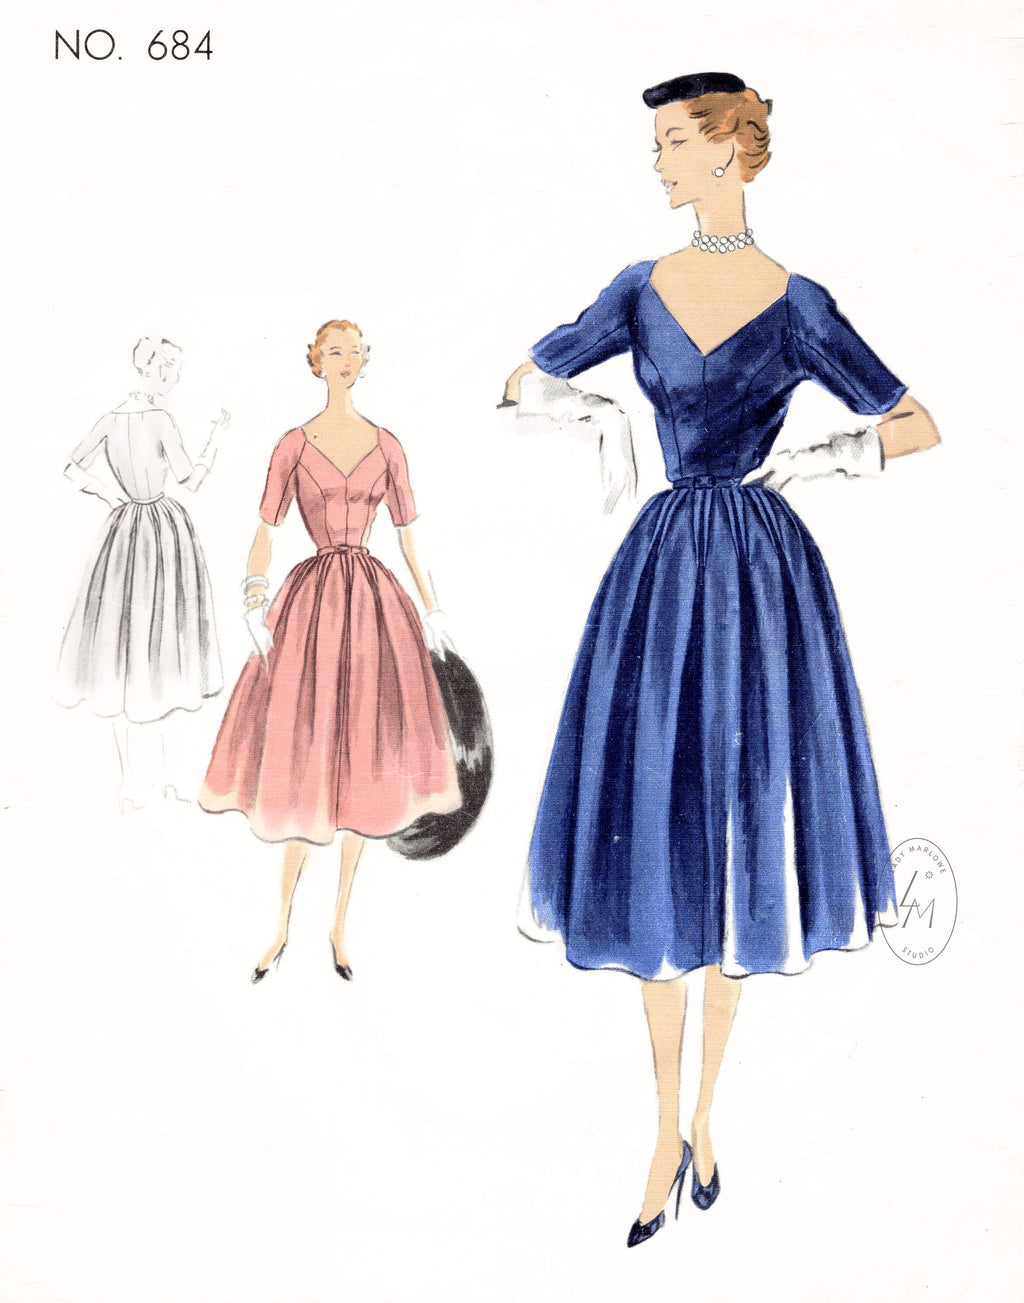 Vogue 684 Couturier 1950s cocktail dress v neckline full skirt vintage sewing pattern reproduction